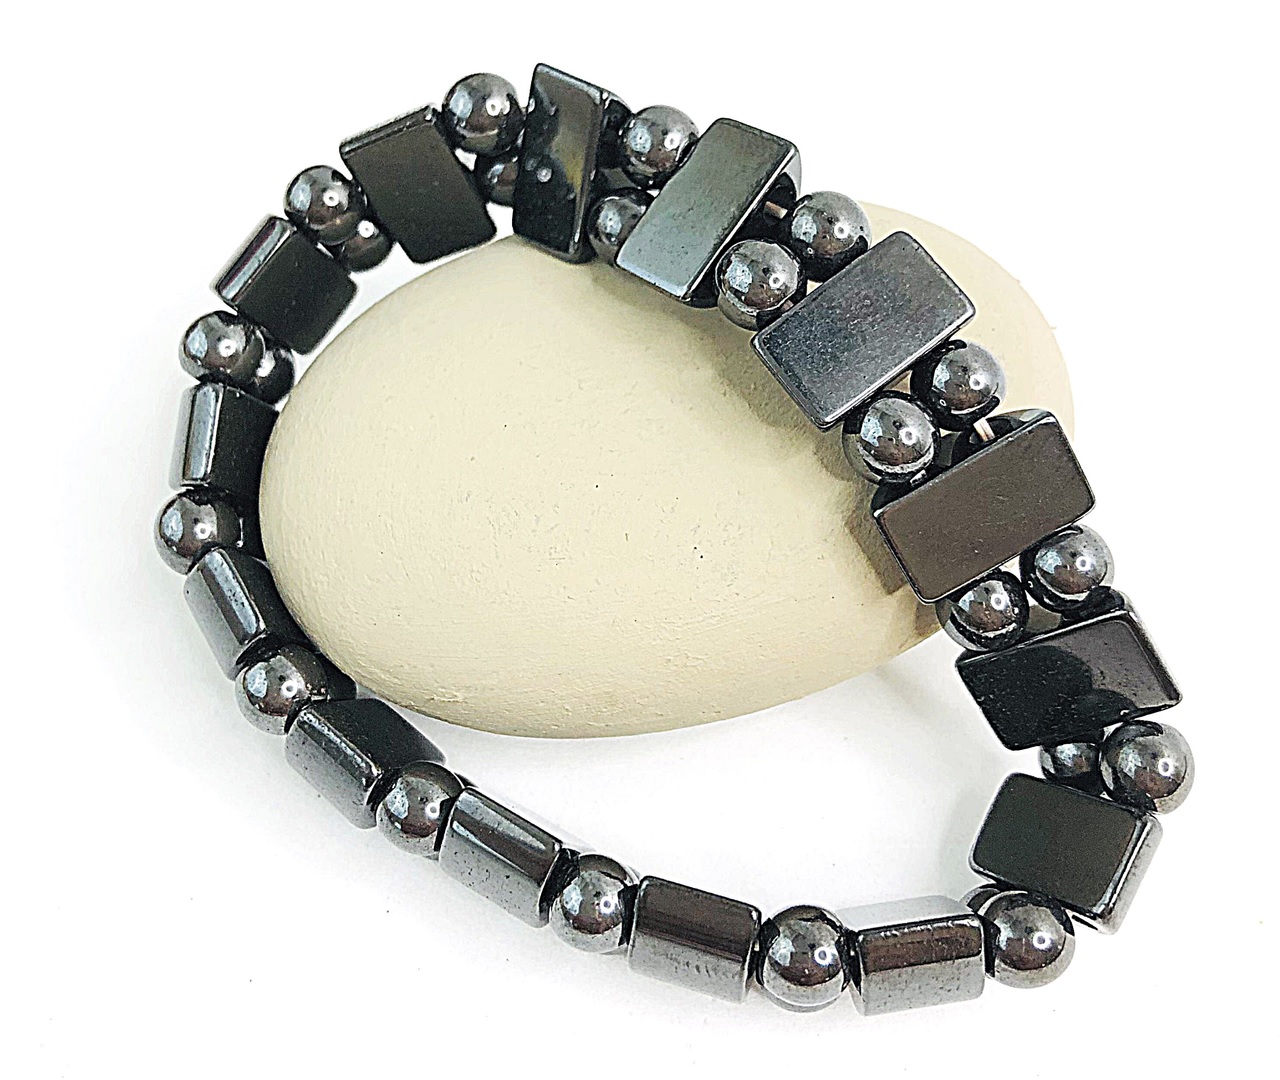 Hematite bracelets and properties